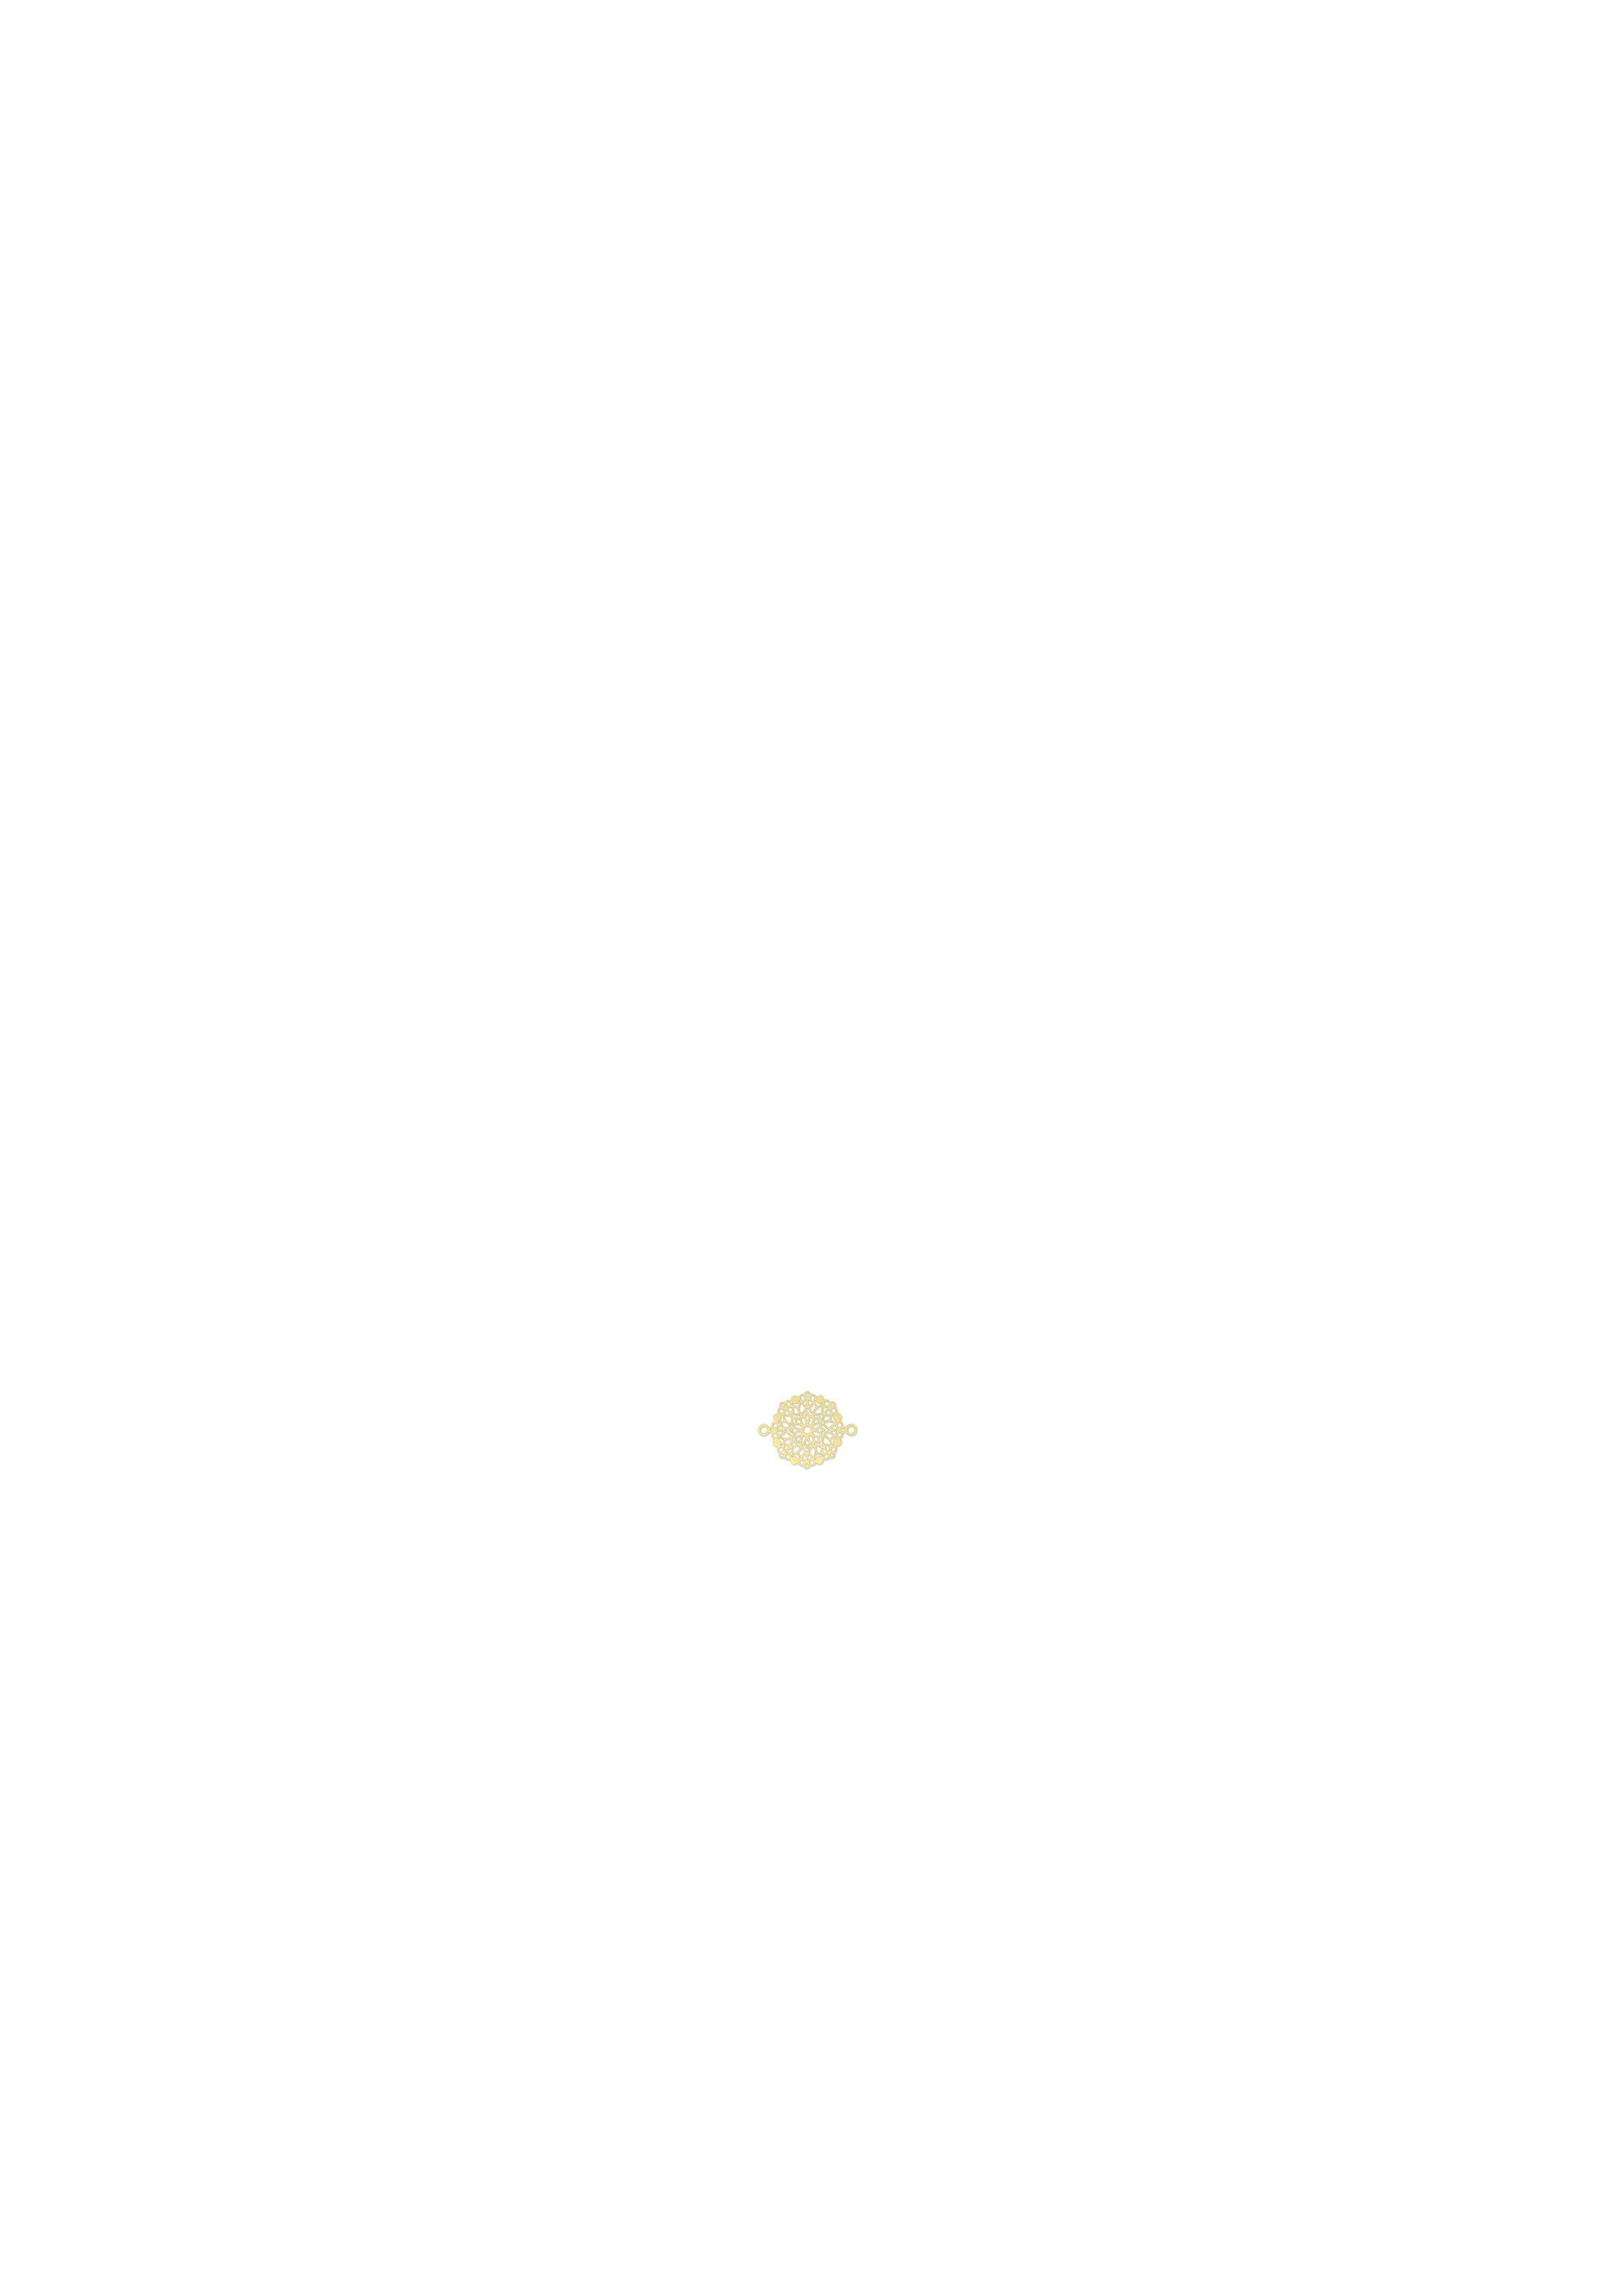 estampe mini rosace dorée